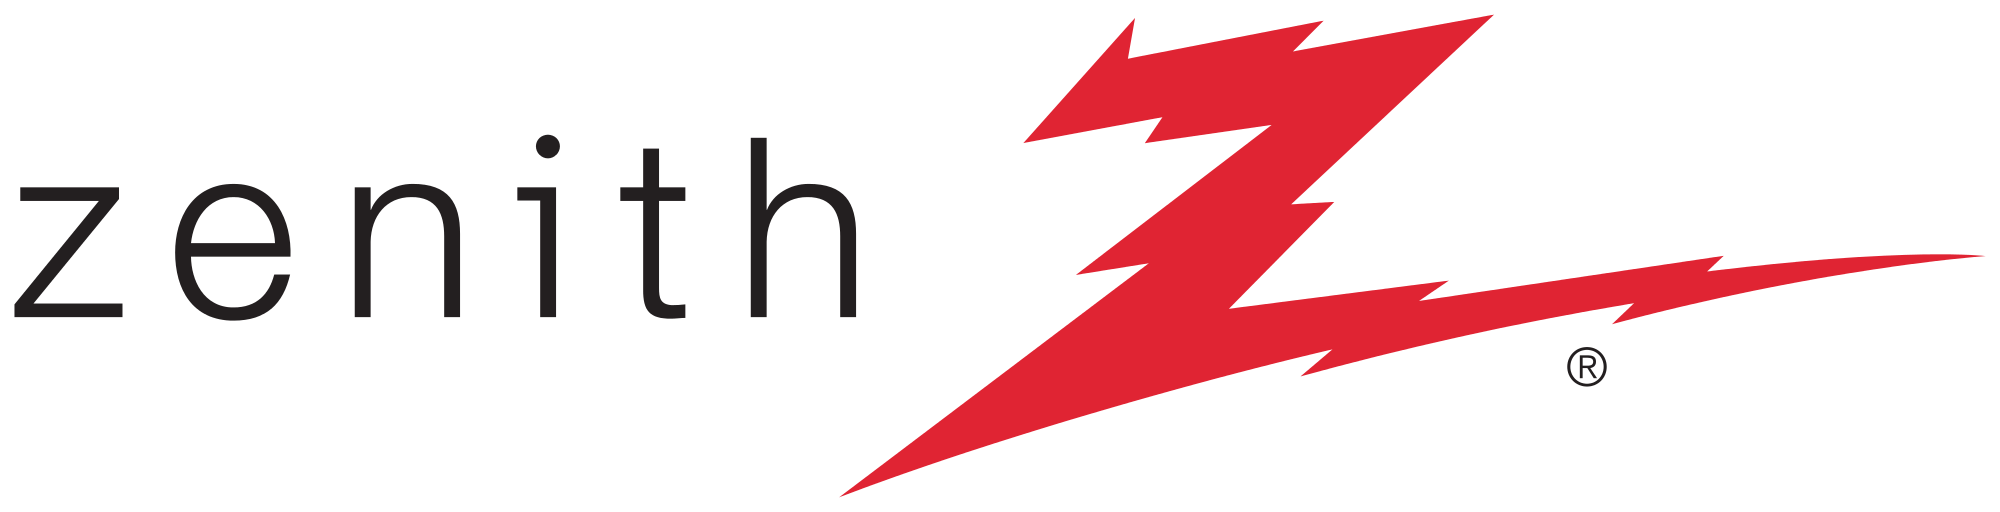 Zenith Logo - File:Zenith Electronics Corporation logo.svg - Wikimedia Commons